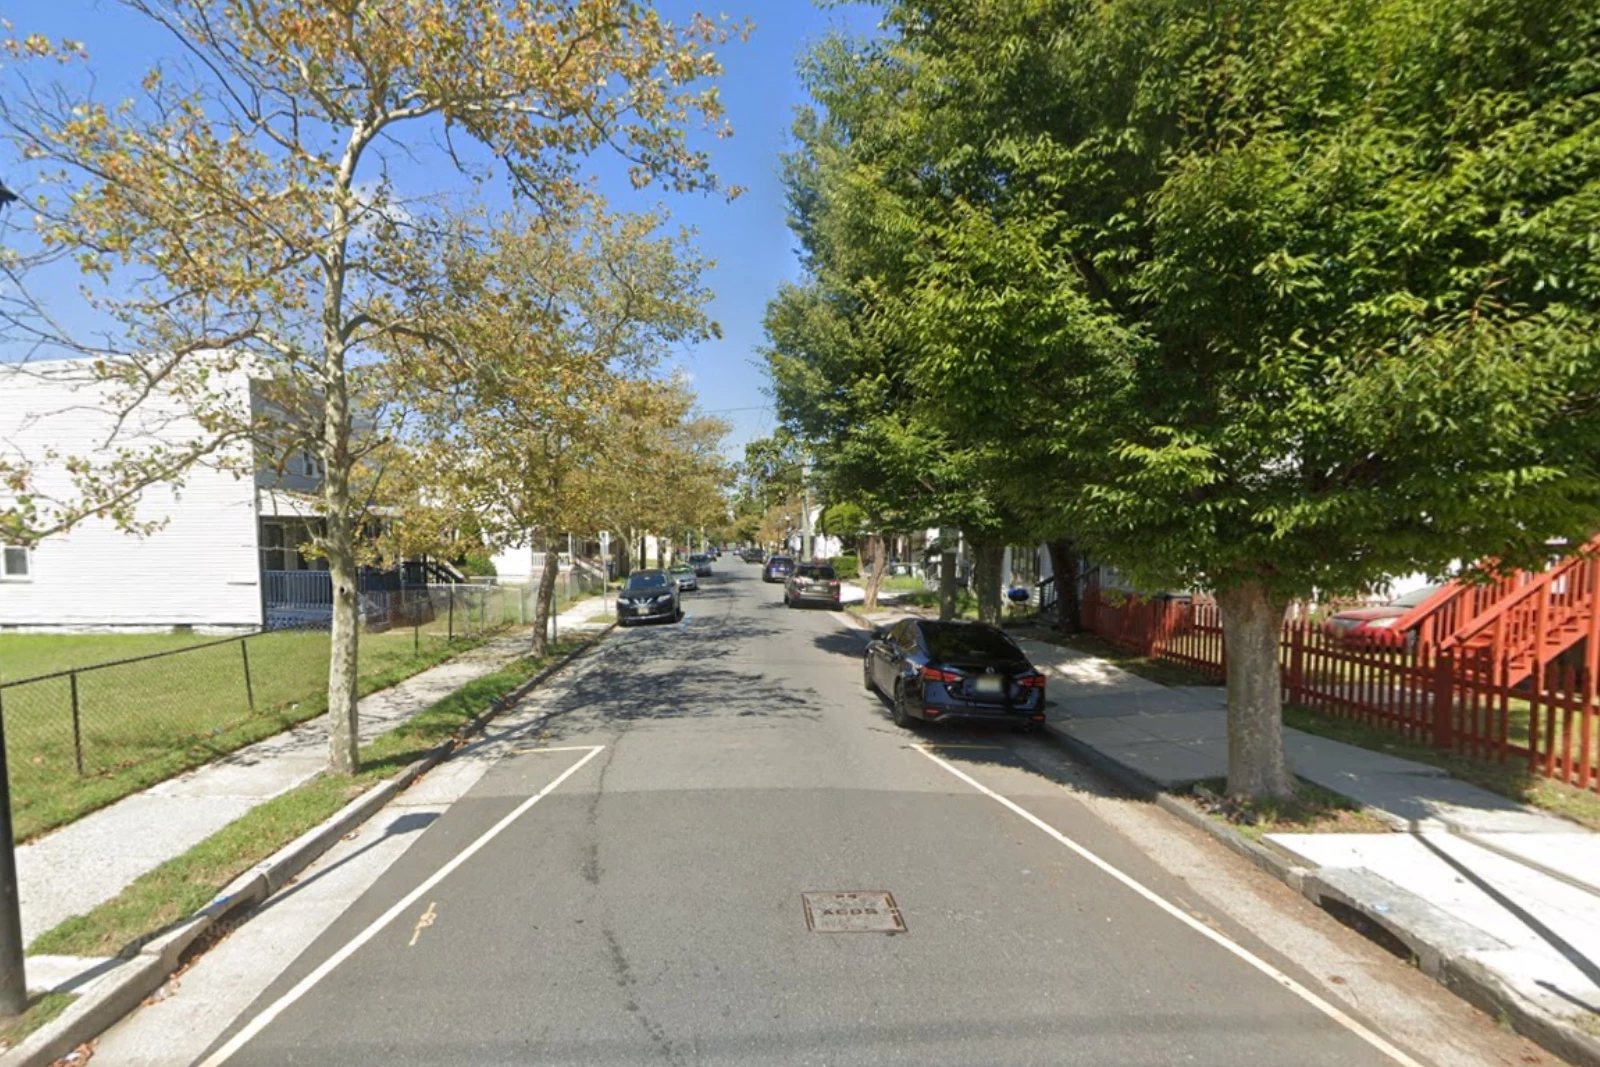 800 block of North Michigan Avenue in Atlantic City NJ - Photo: Google Maps